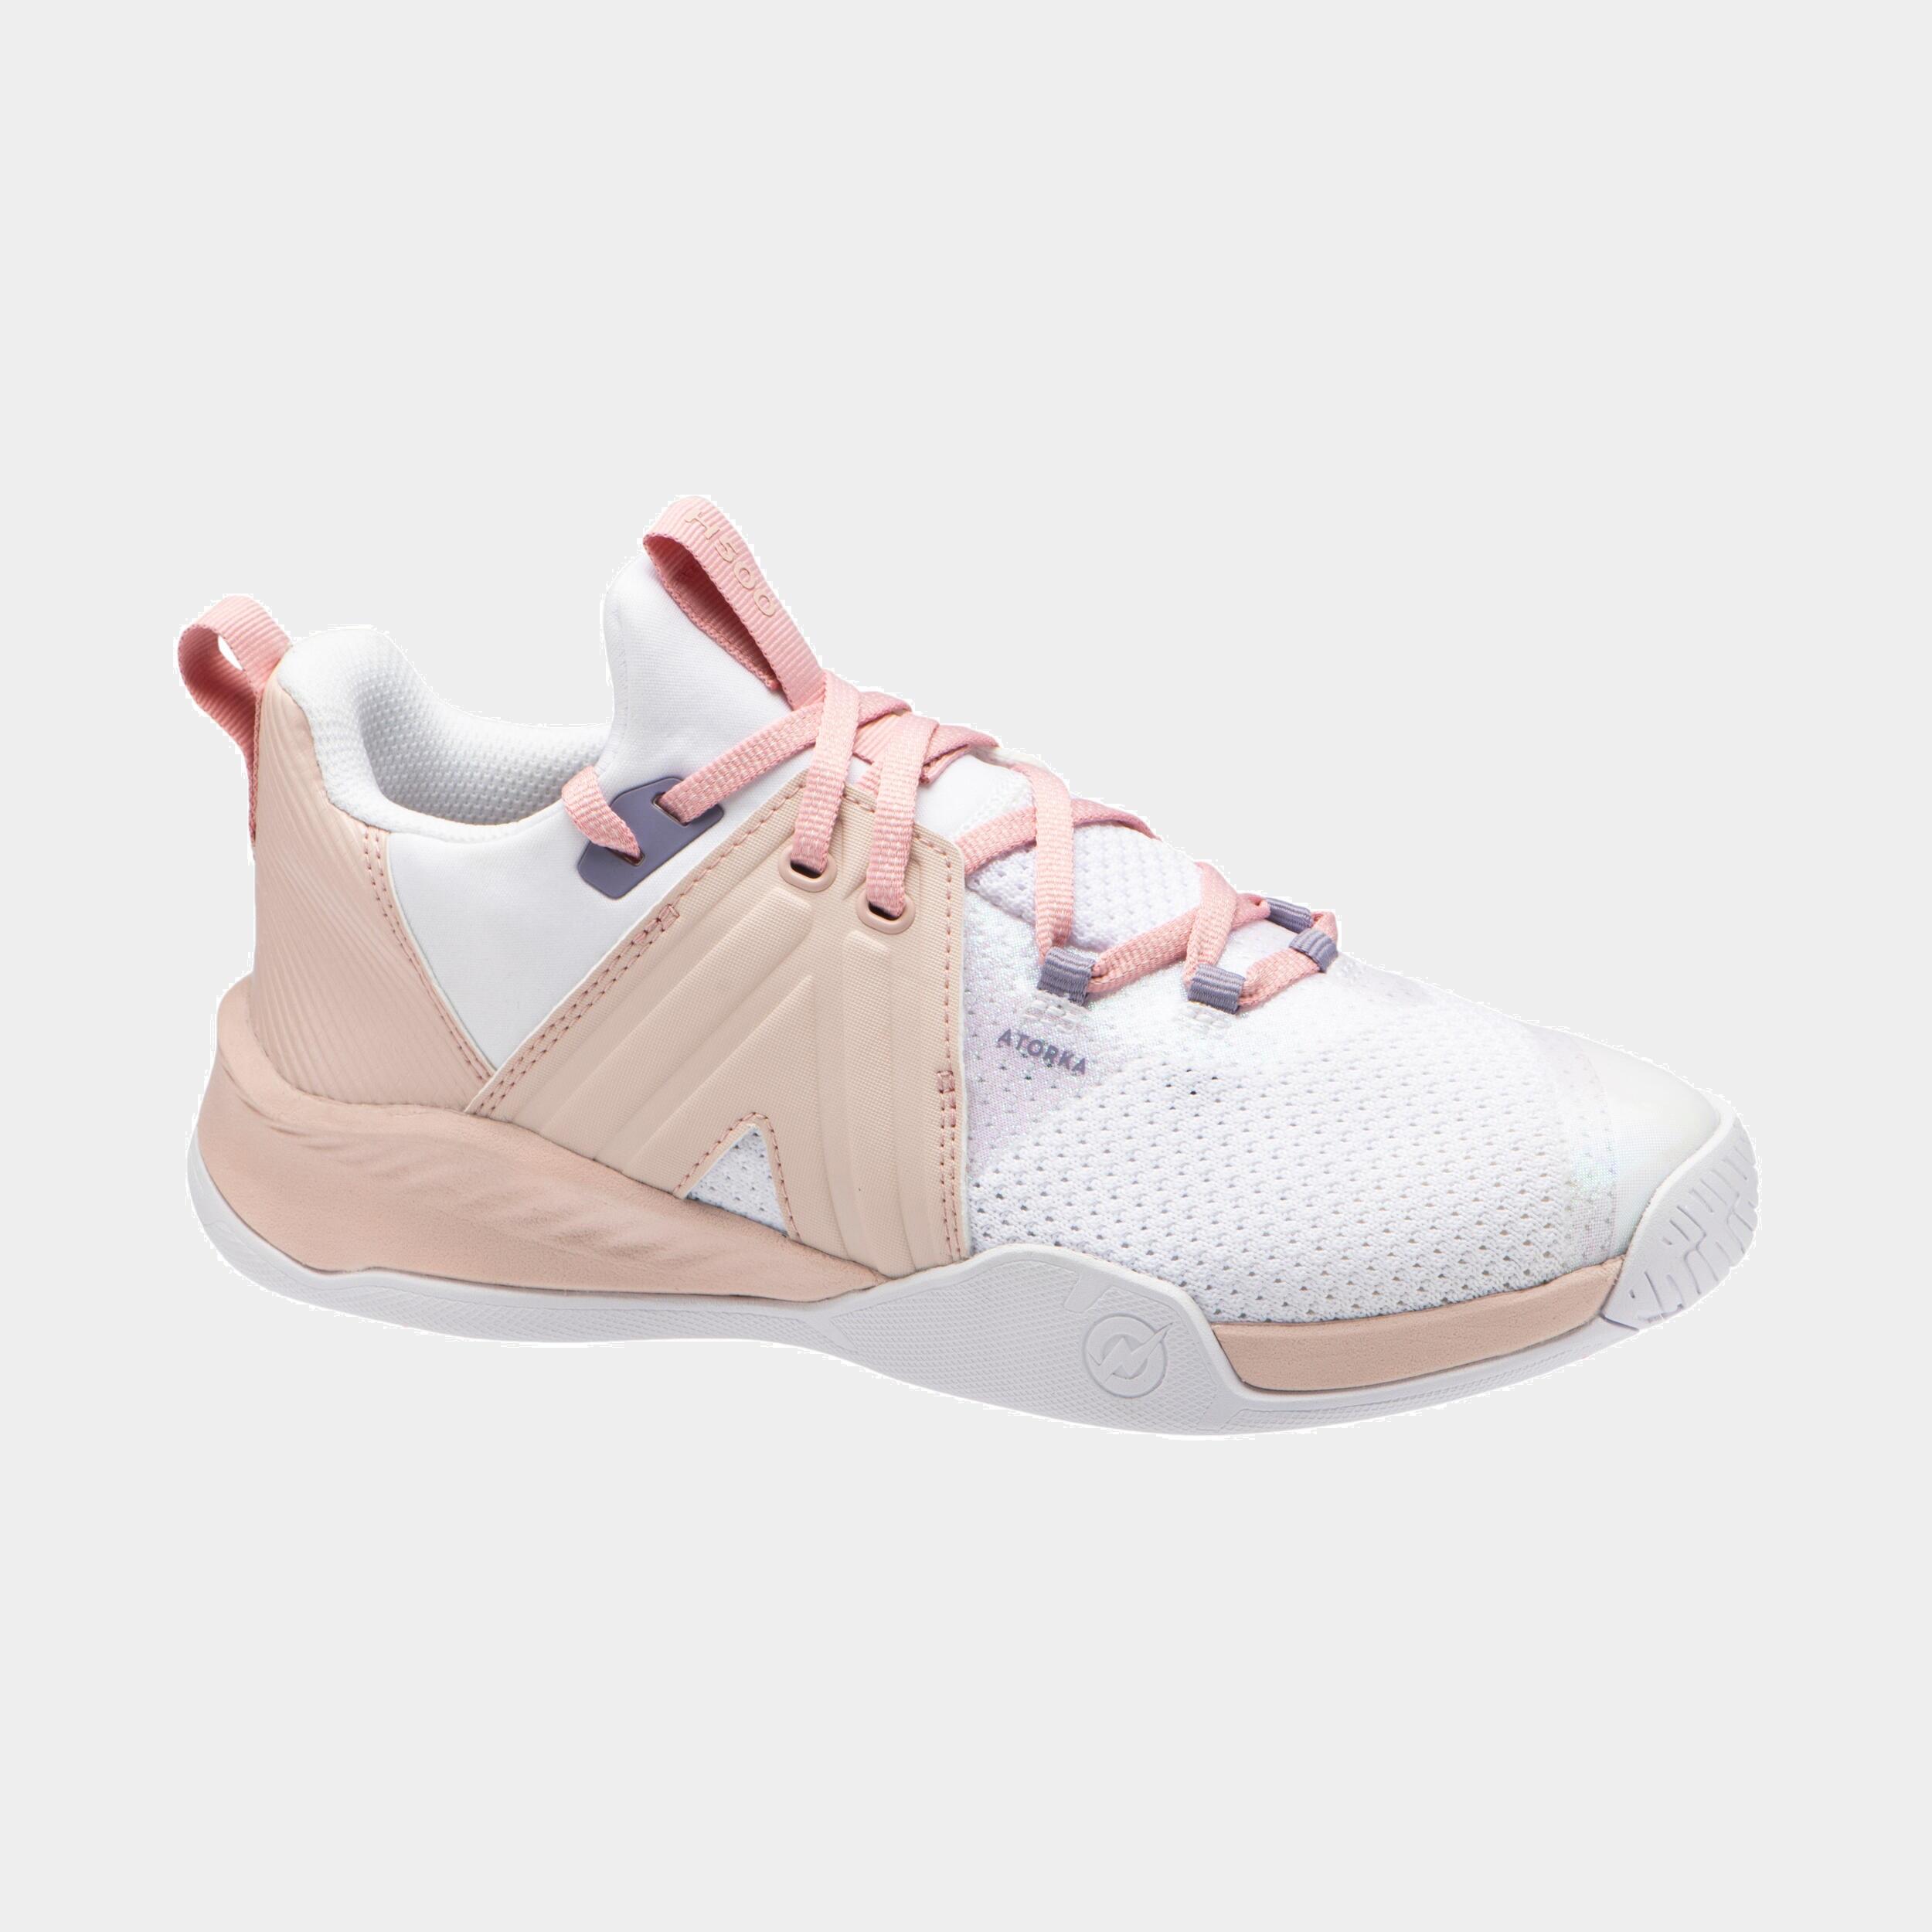 ATORKA Men's/Women's Handball Shoes H500 Faster - Pink/White